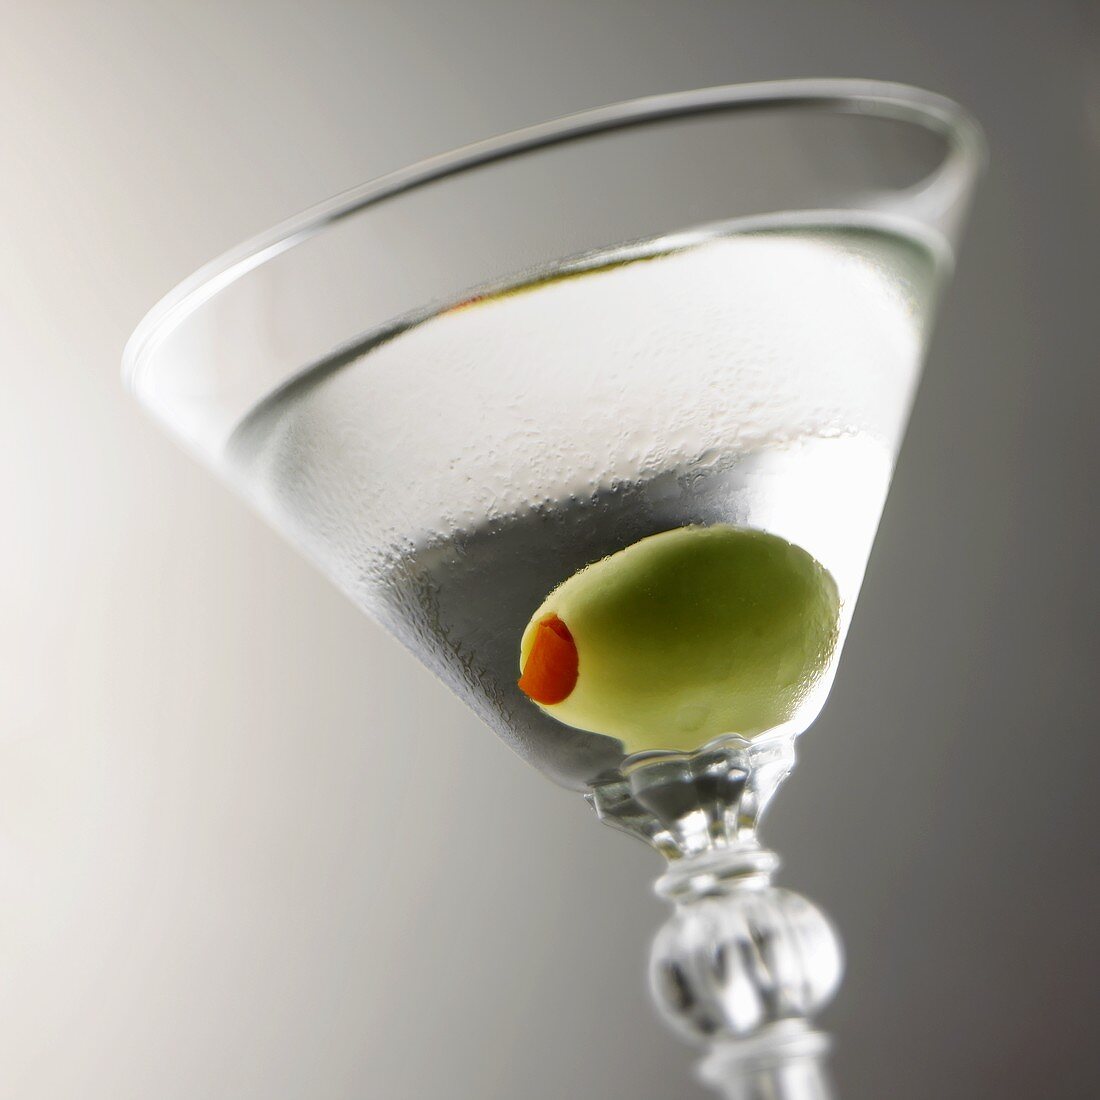 Klassischer Martini mit grüner Olive